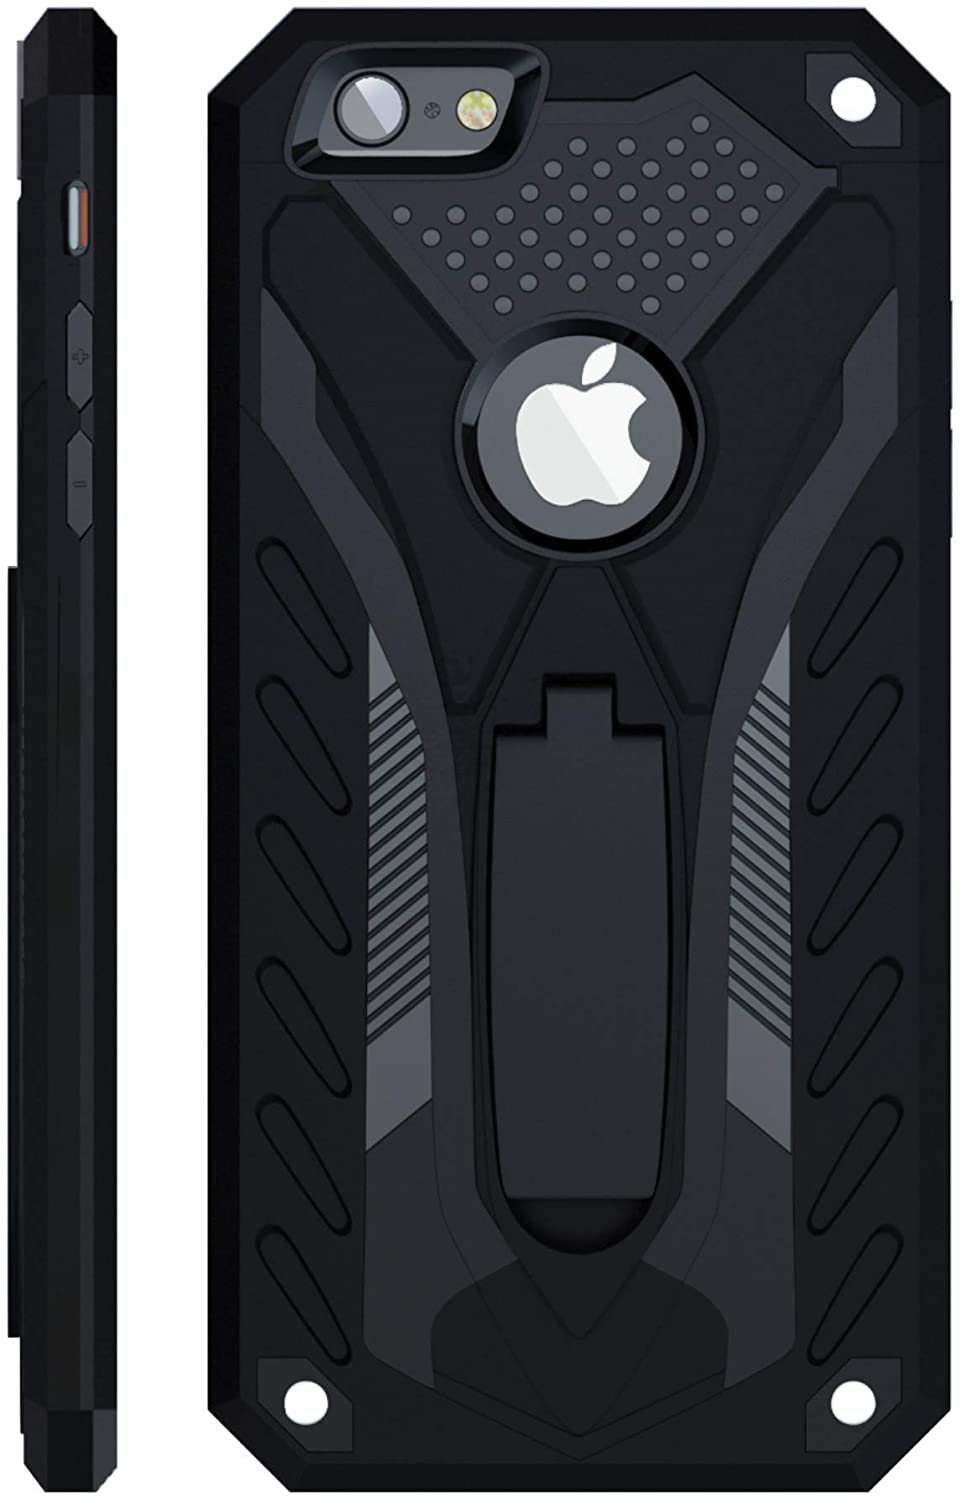 iPhone 6 Plus / iPhone 6s Plus Hard Case with Kickstand Black